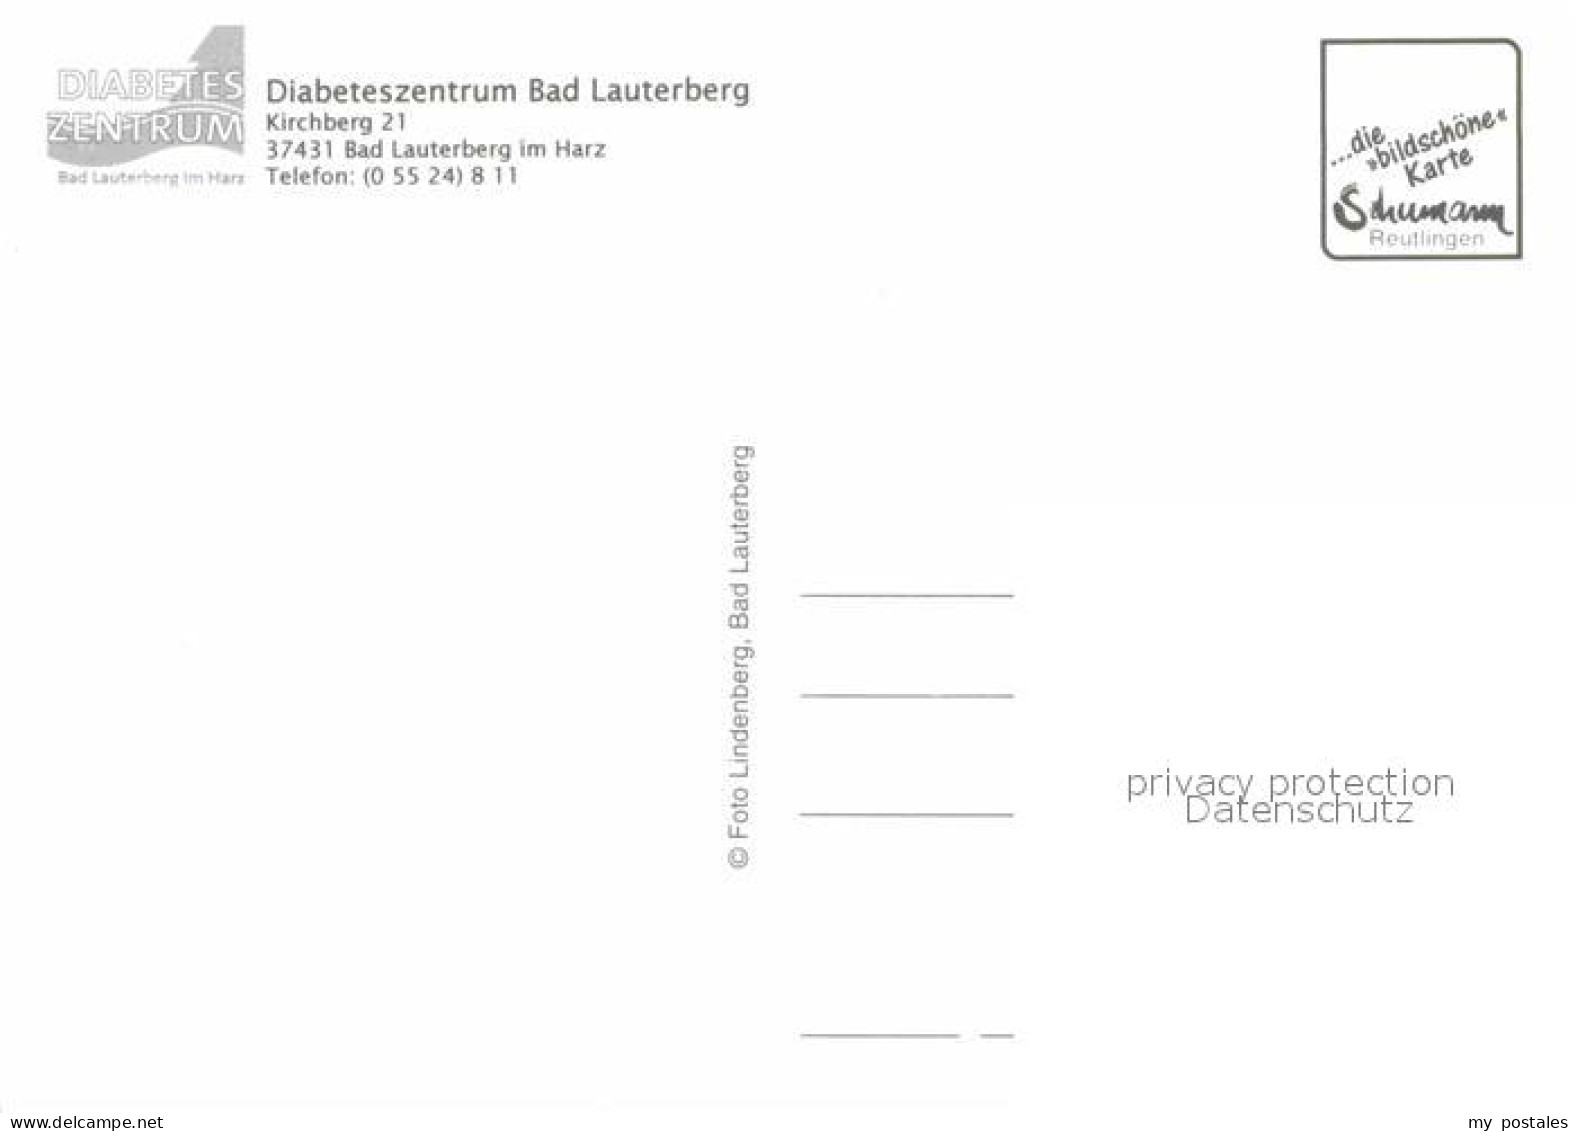 72793011 Bad Lauterberg Diabeteszentrum Bad Lauterberg - Bad Lauterberg